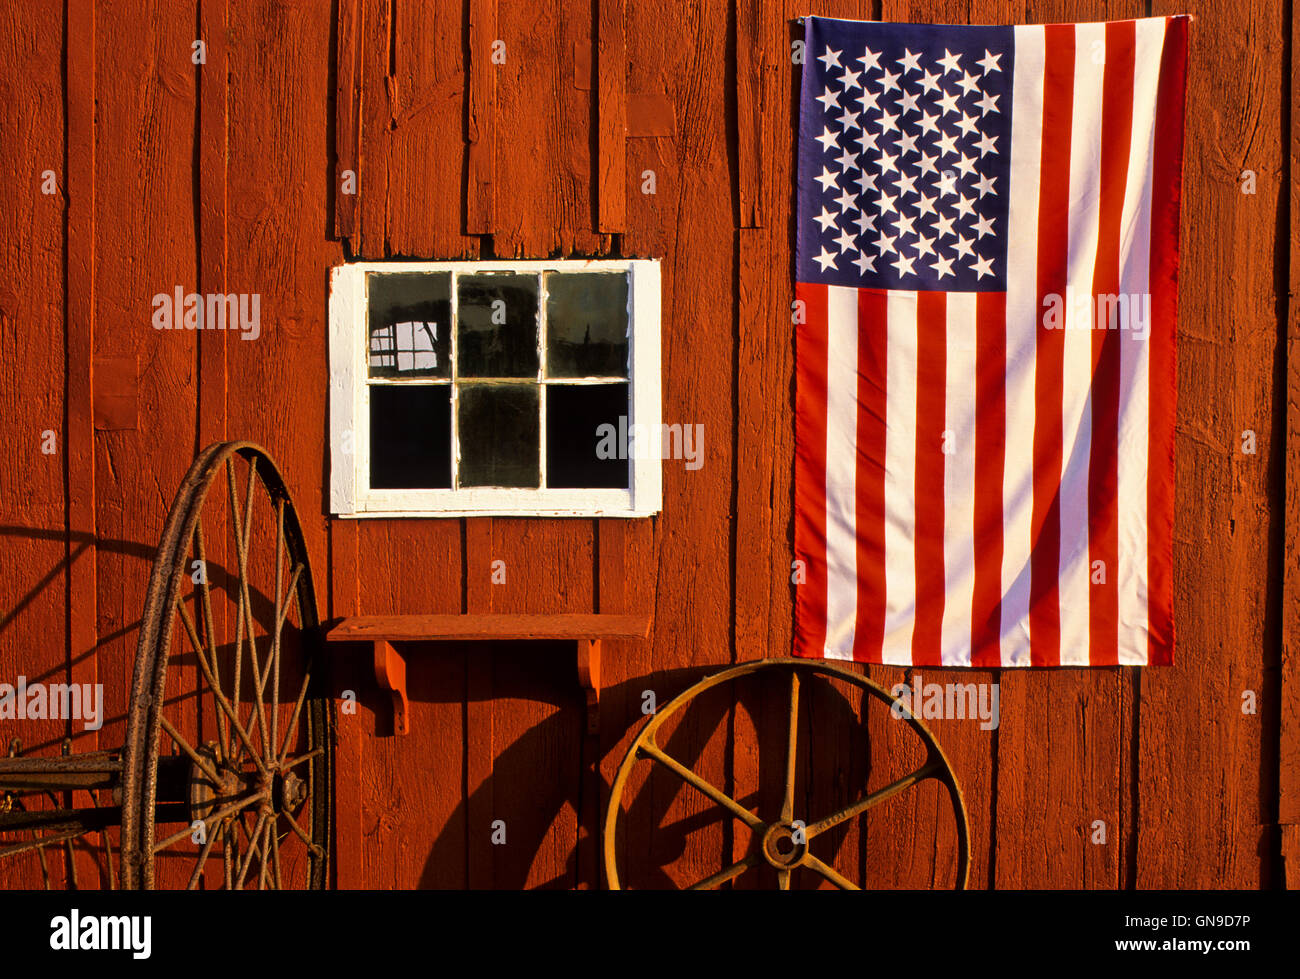 Amerikanische Flagge Nahaufnahme einer alten roten Scheune in Monroe Twp., New Jersey, USA, USA Farmszene Objekte US-Flagge Sommer Frühling Herbst Stockfoto